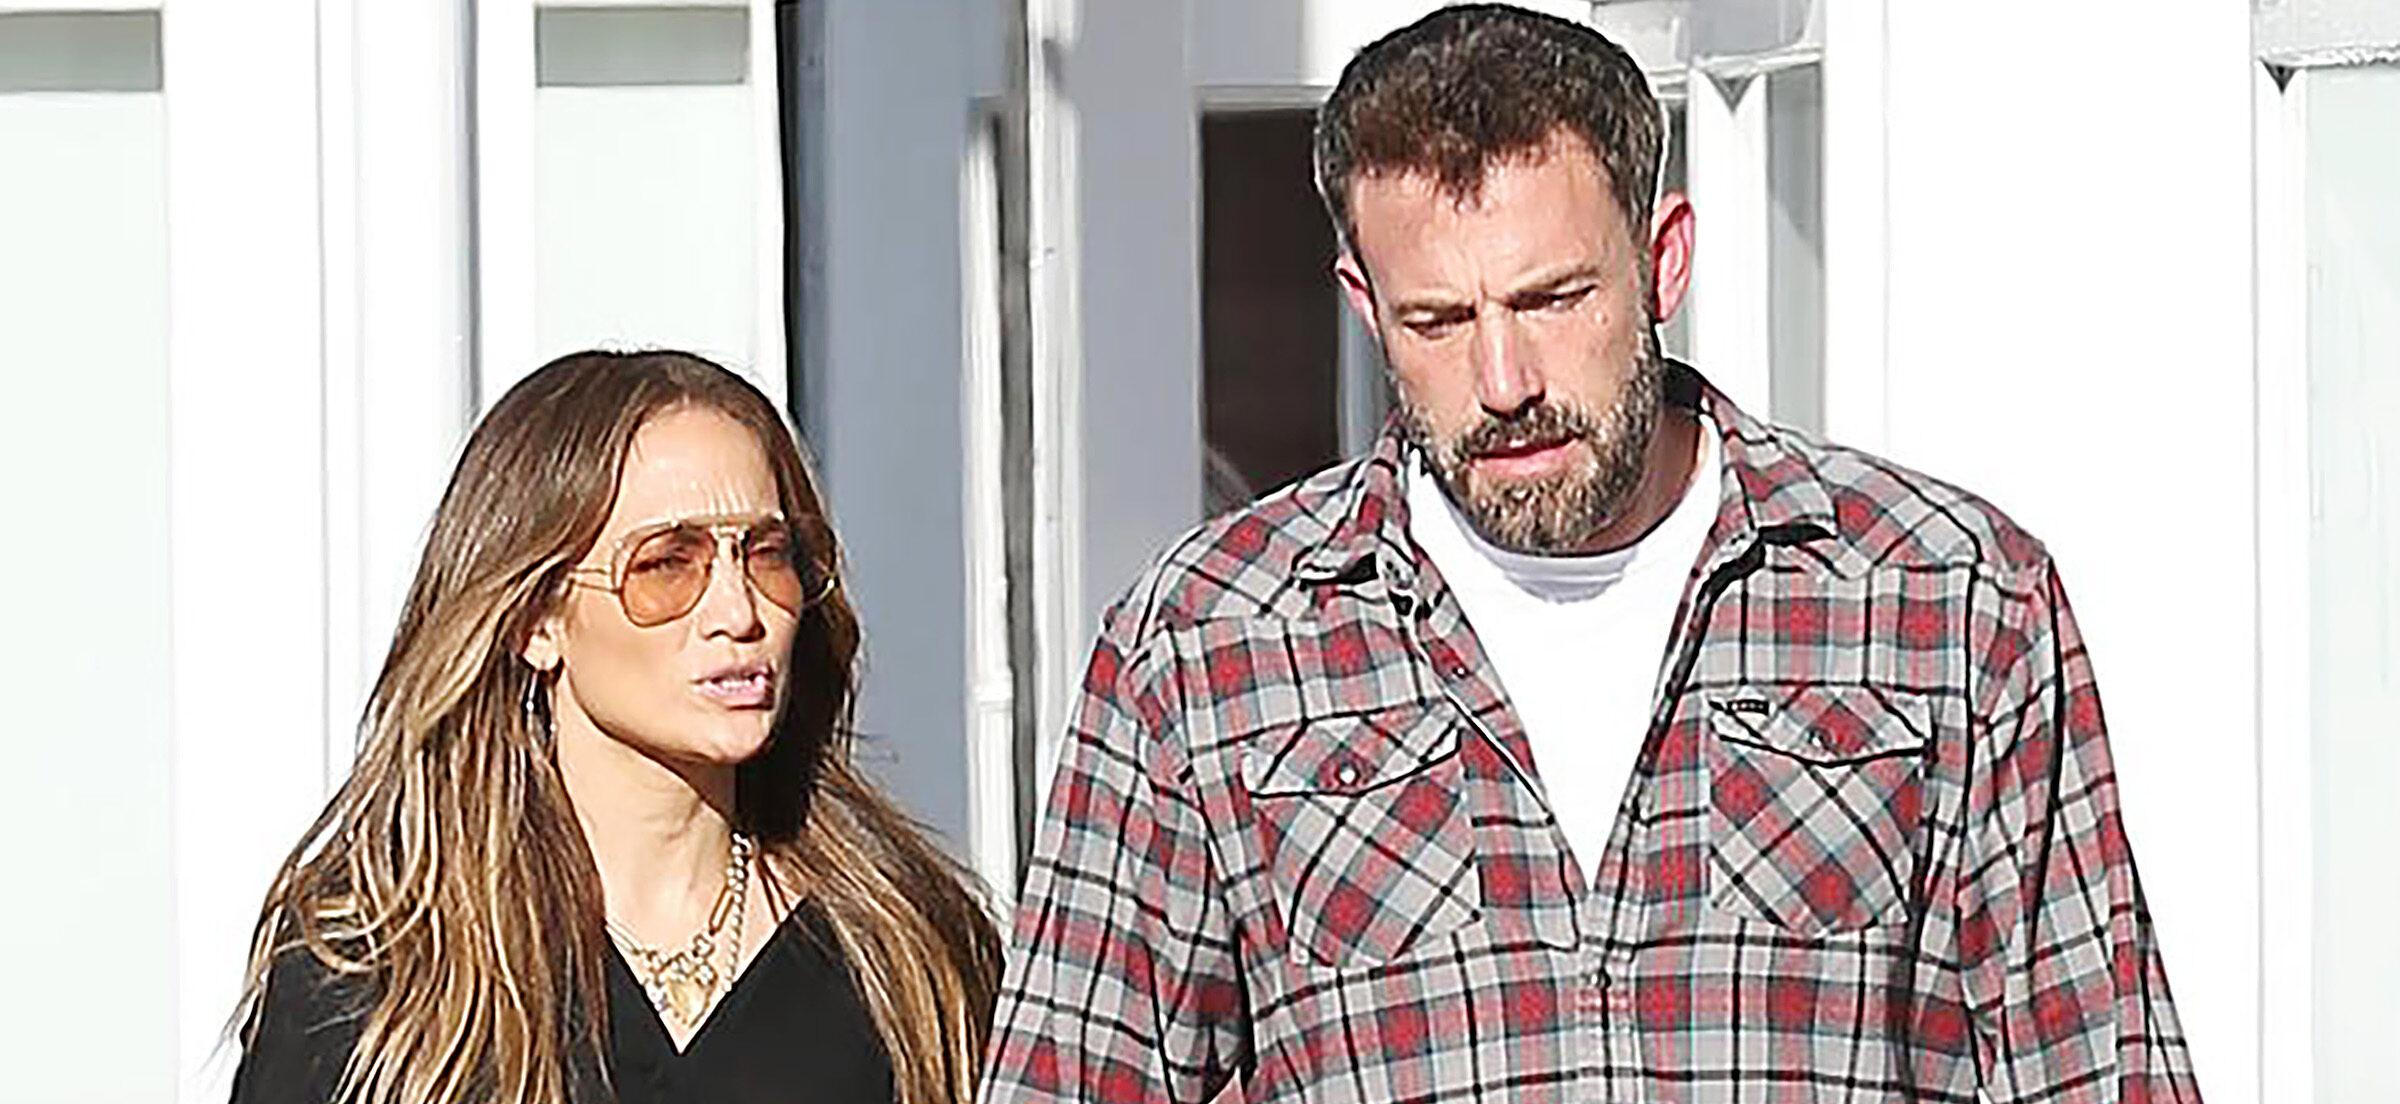 Jennifer Lopez And Ben Affleck Divorce Rumors Intensify As Singer ‘Likes’ Breakup Post On IG